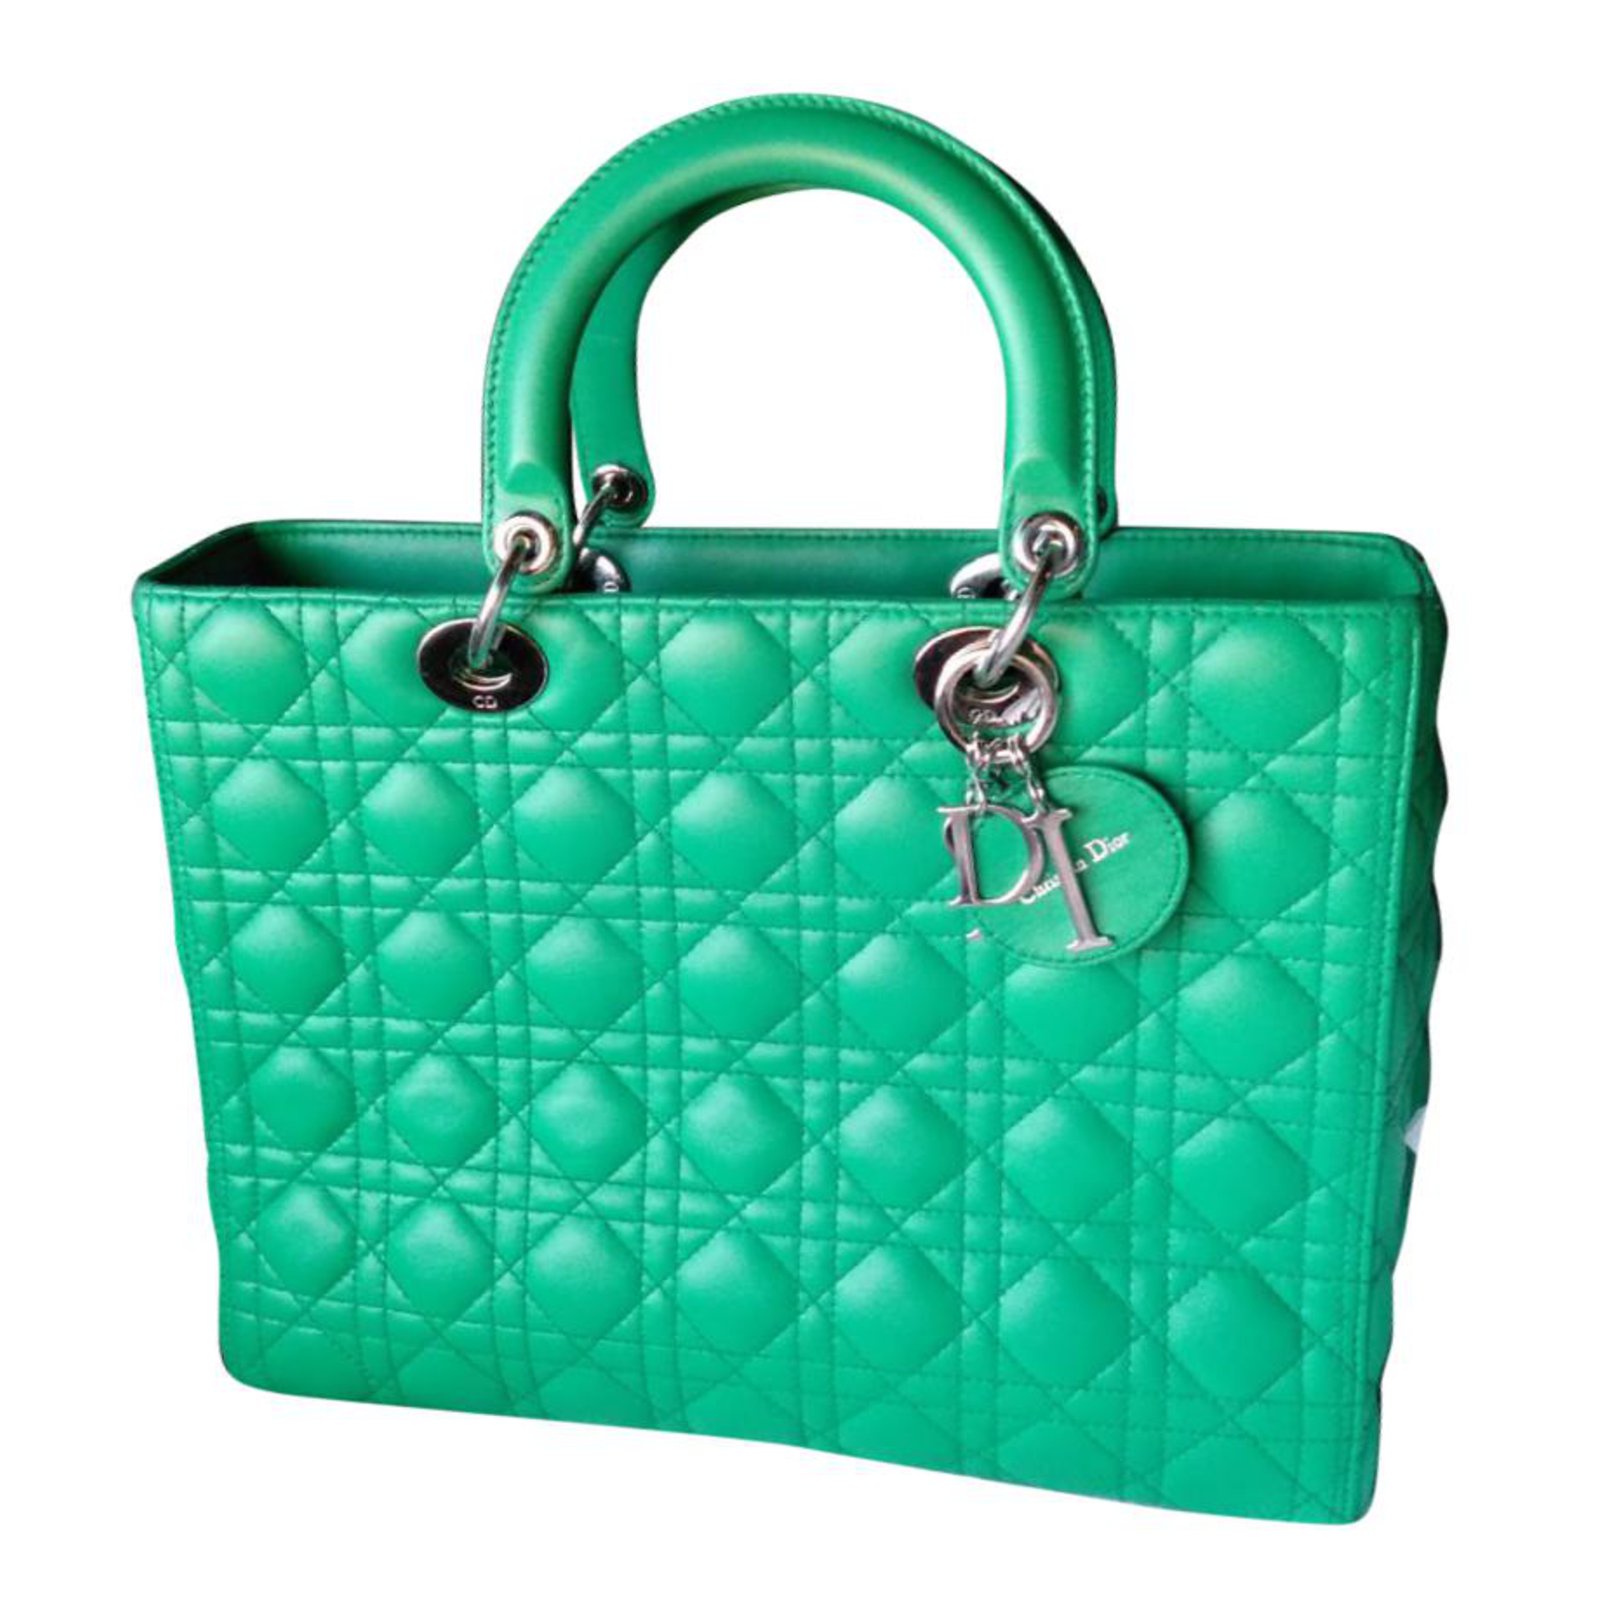 lady dior bag green